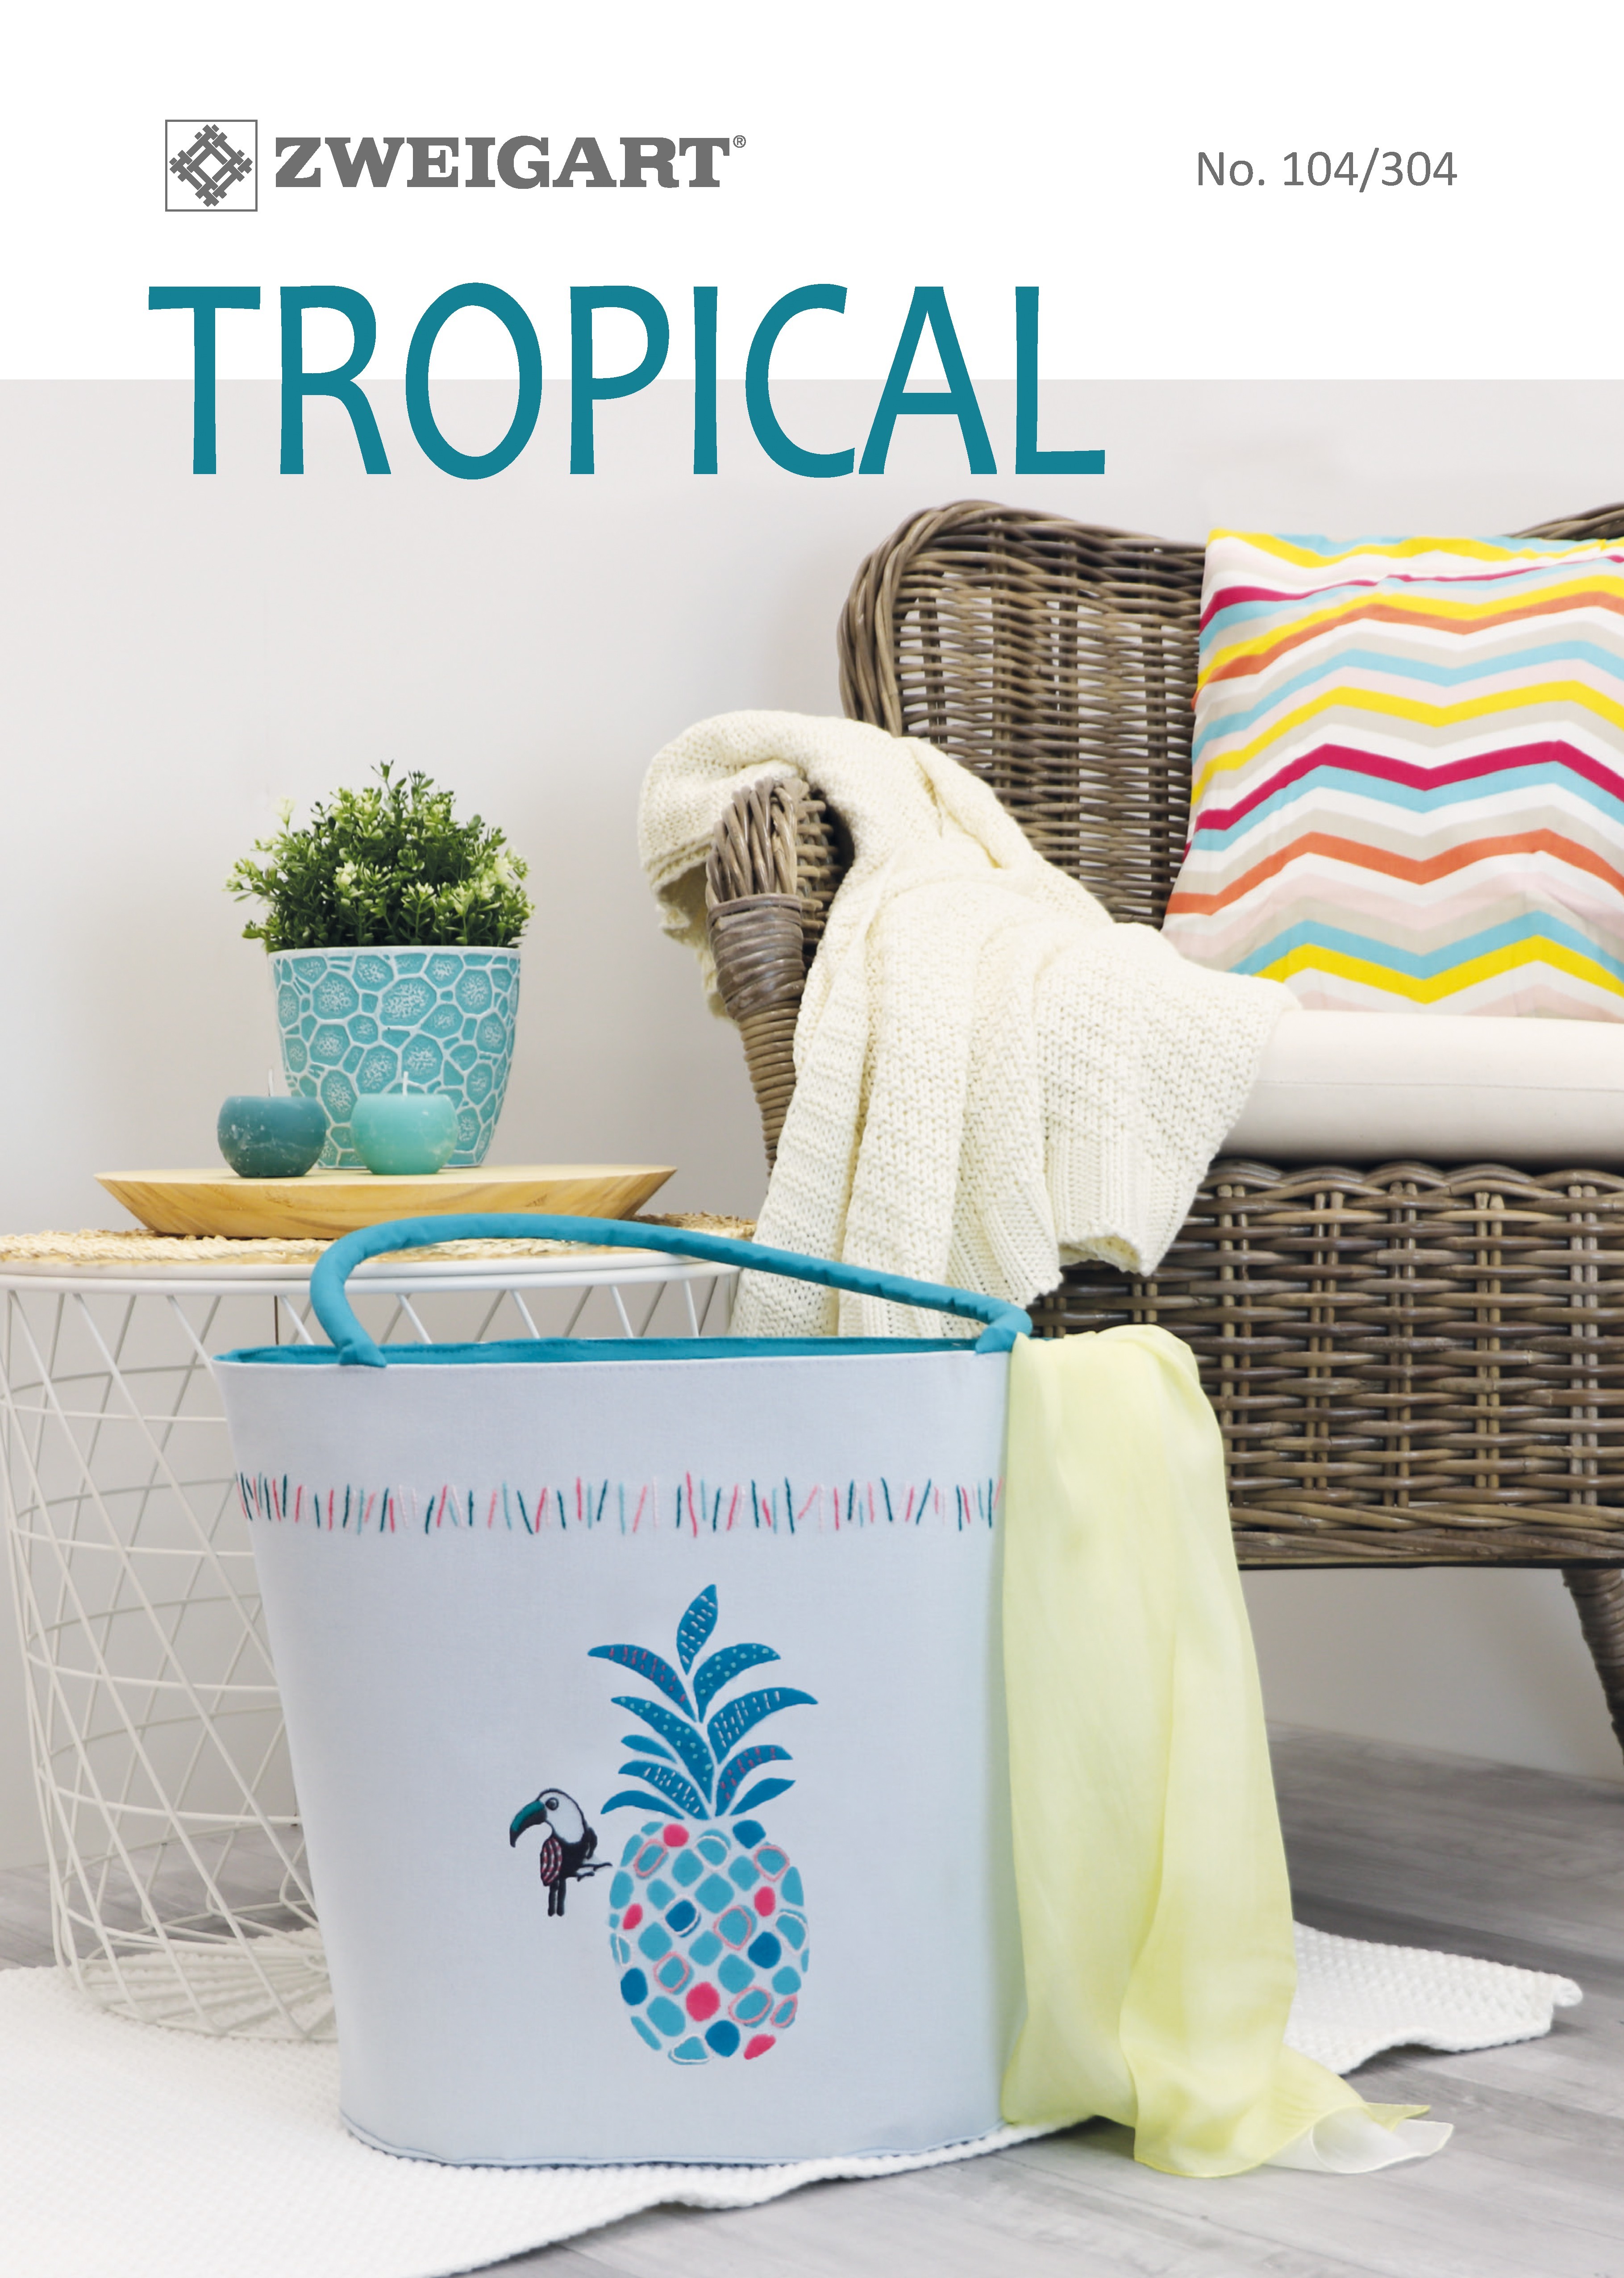 Book 304 Tropical